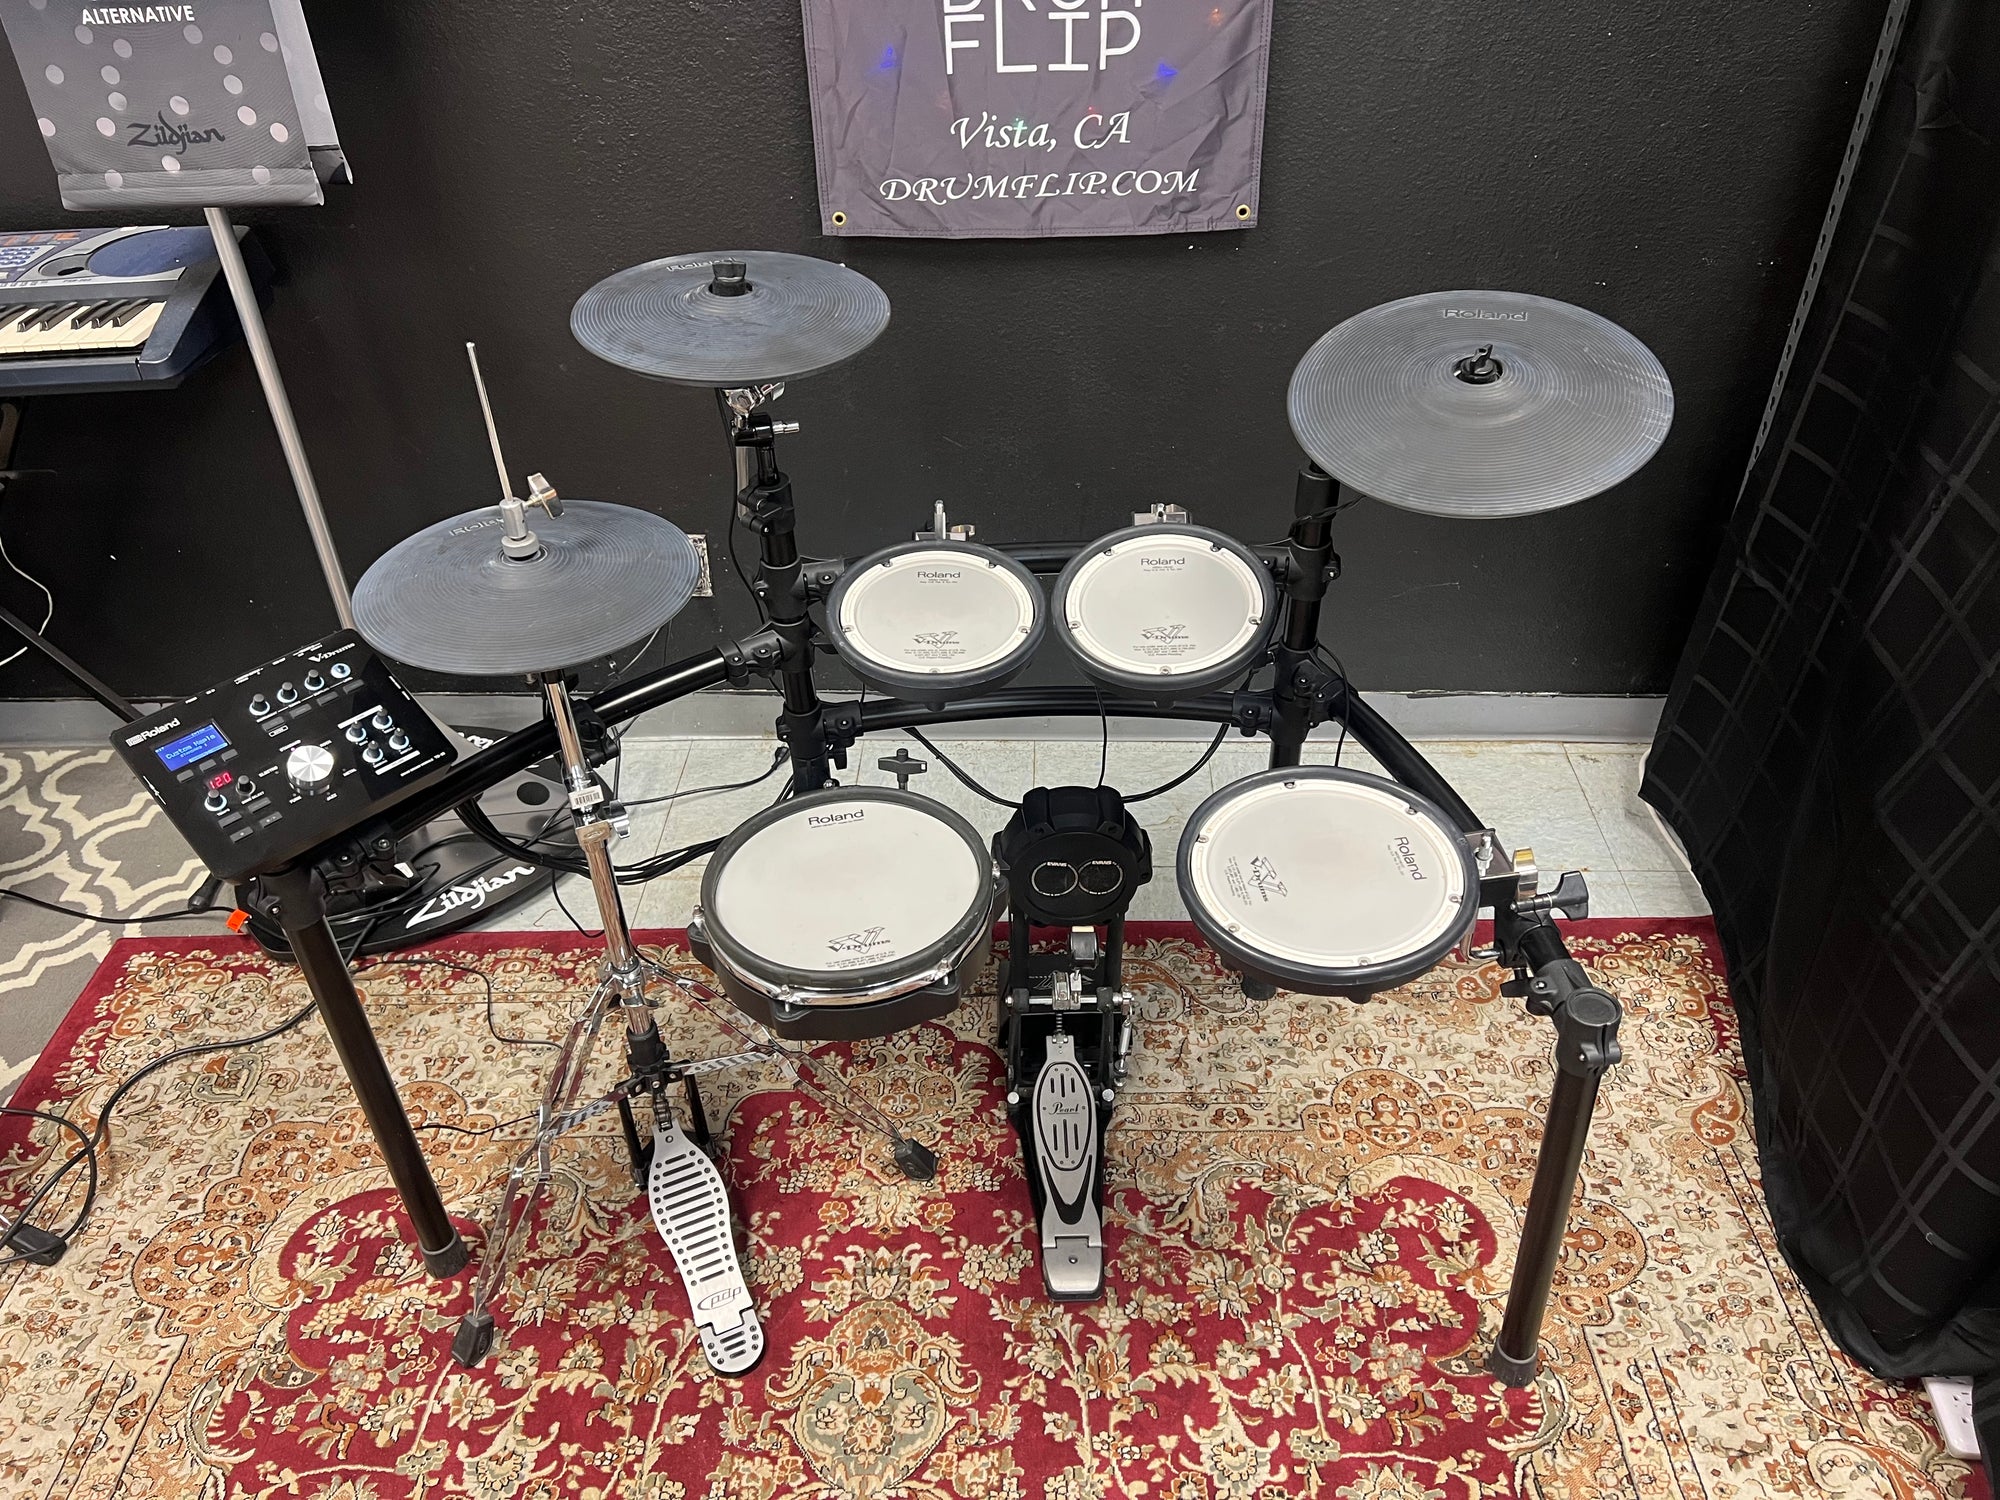 Roland TD-25K Electronic drum set